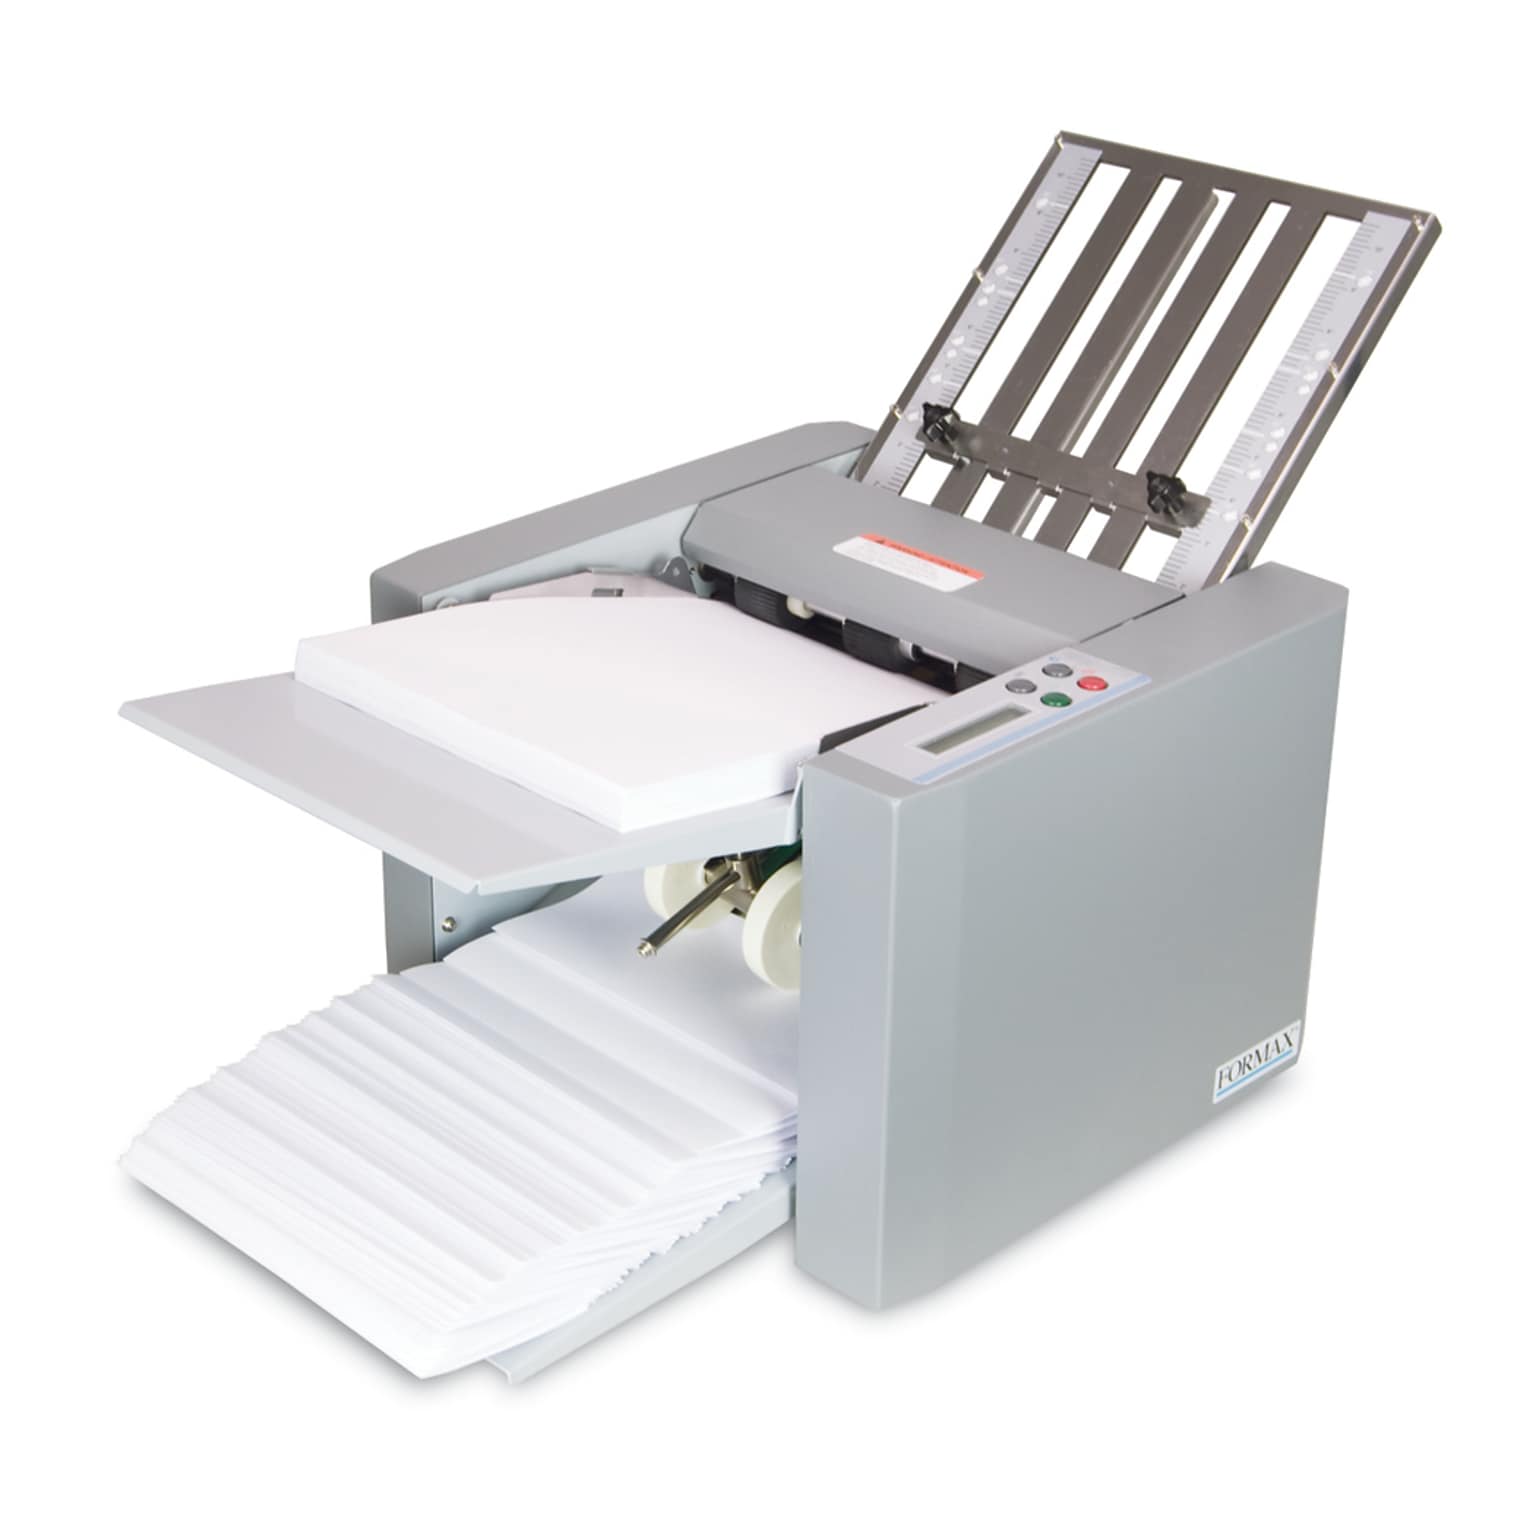 Formax FD 314 Automatic Paper Folder, 250 Sheets (FD314)